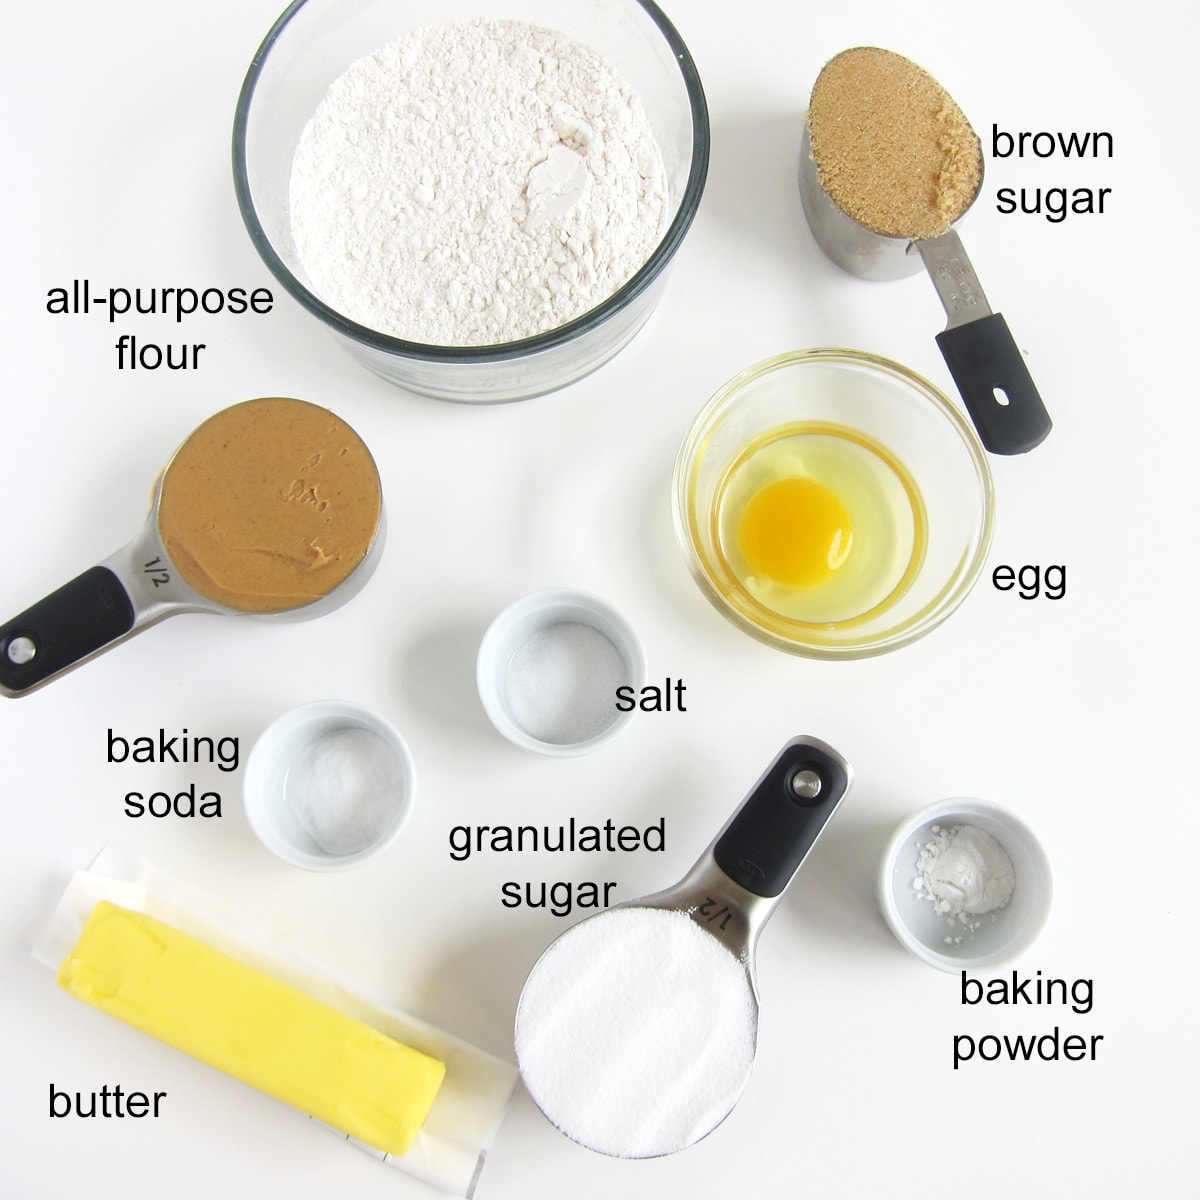 Peanut butter cookie ingredients including brown sugar, granulated sugar, butter, peanut butter, egg, flour, baking soda, baking powder, and salt.